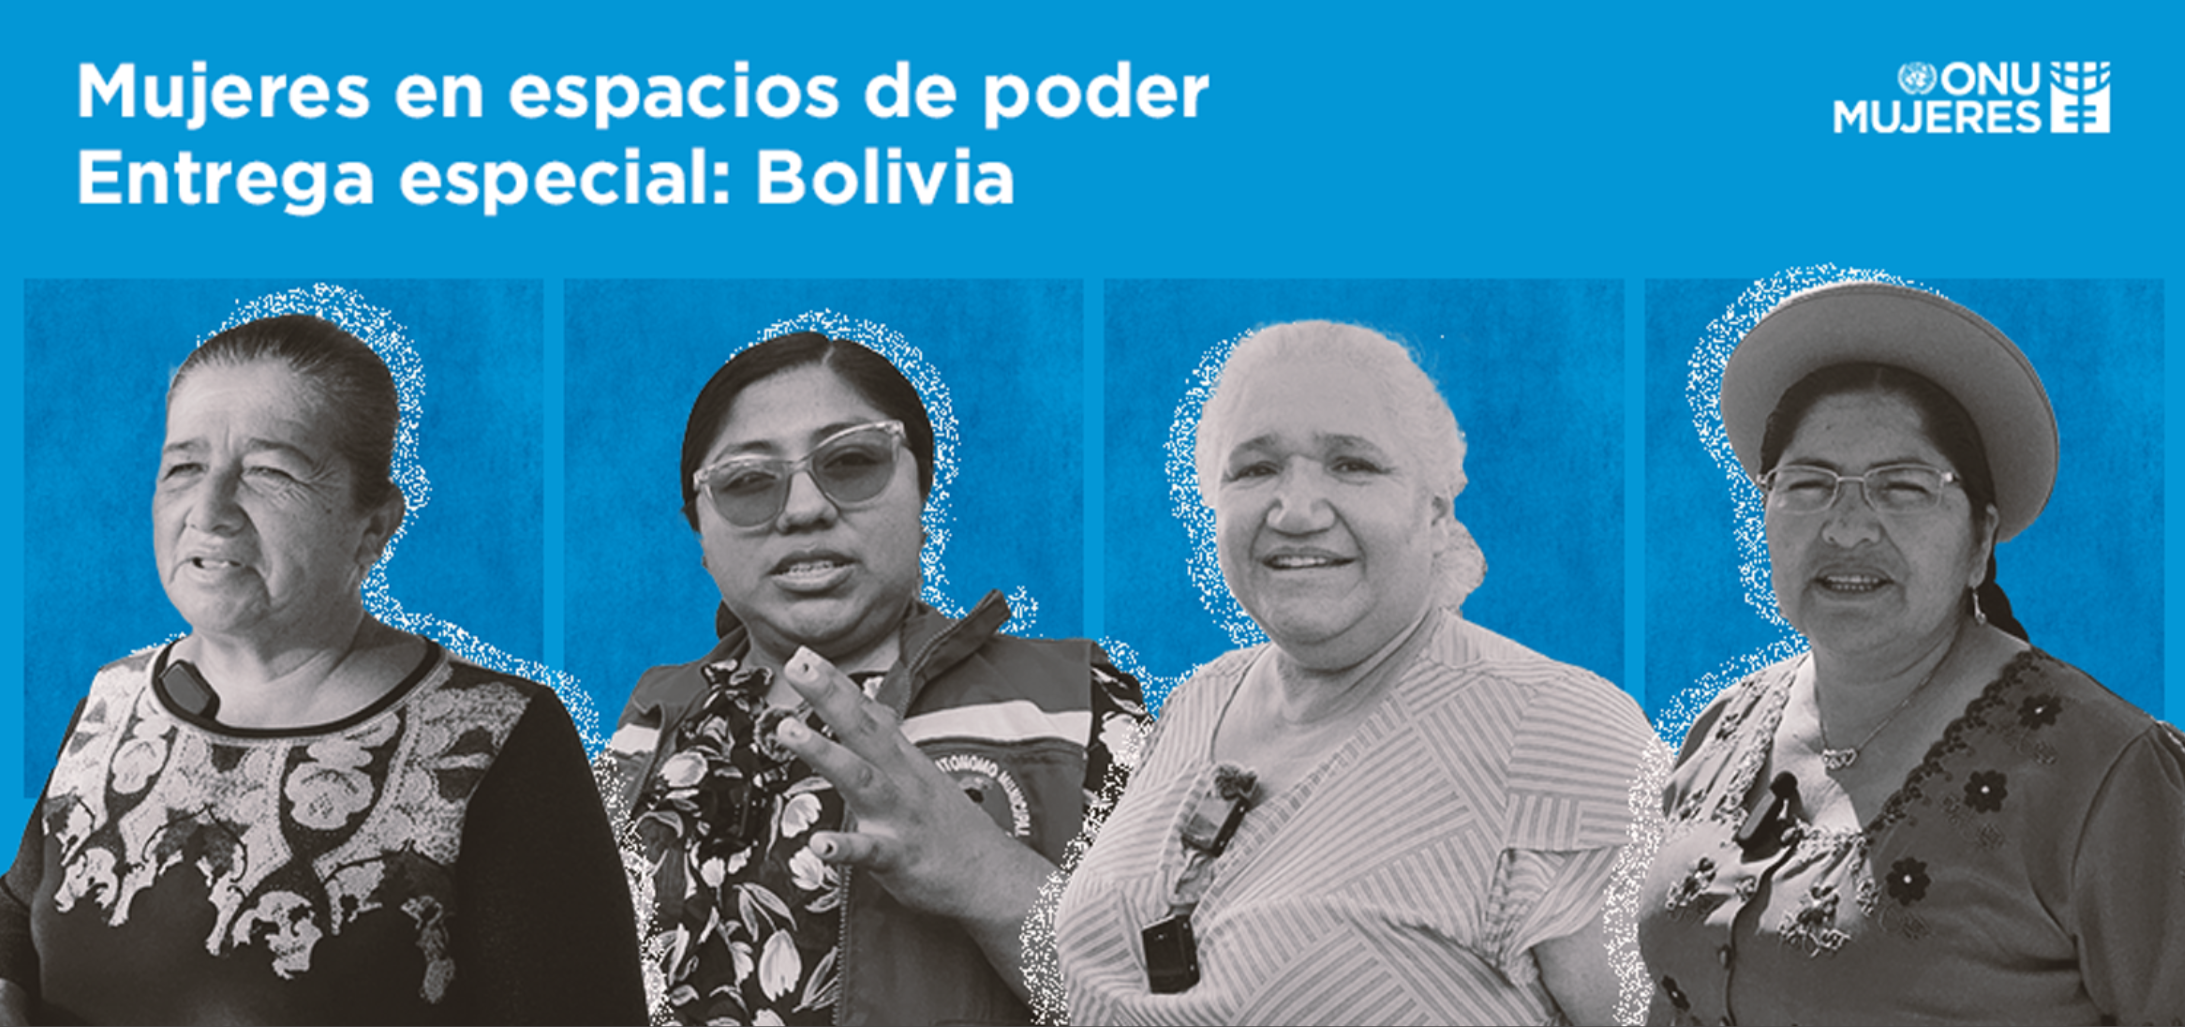 mujeres_en_espacios_de_poder_bolivia.png